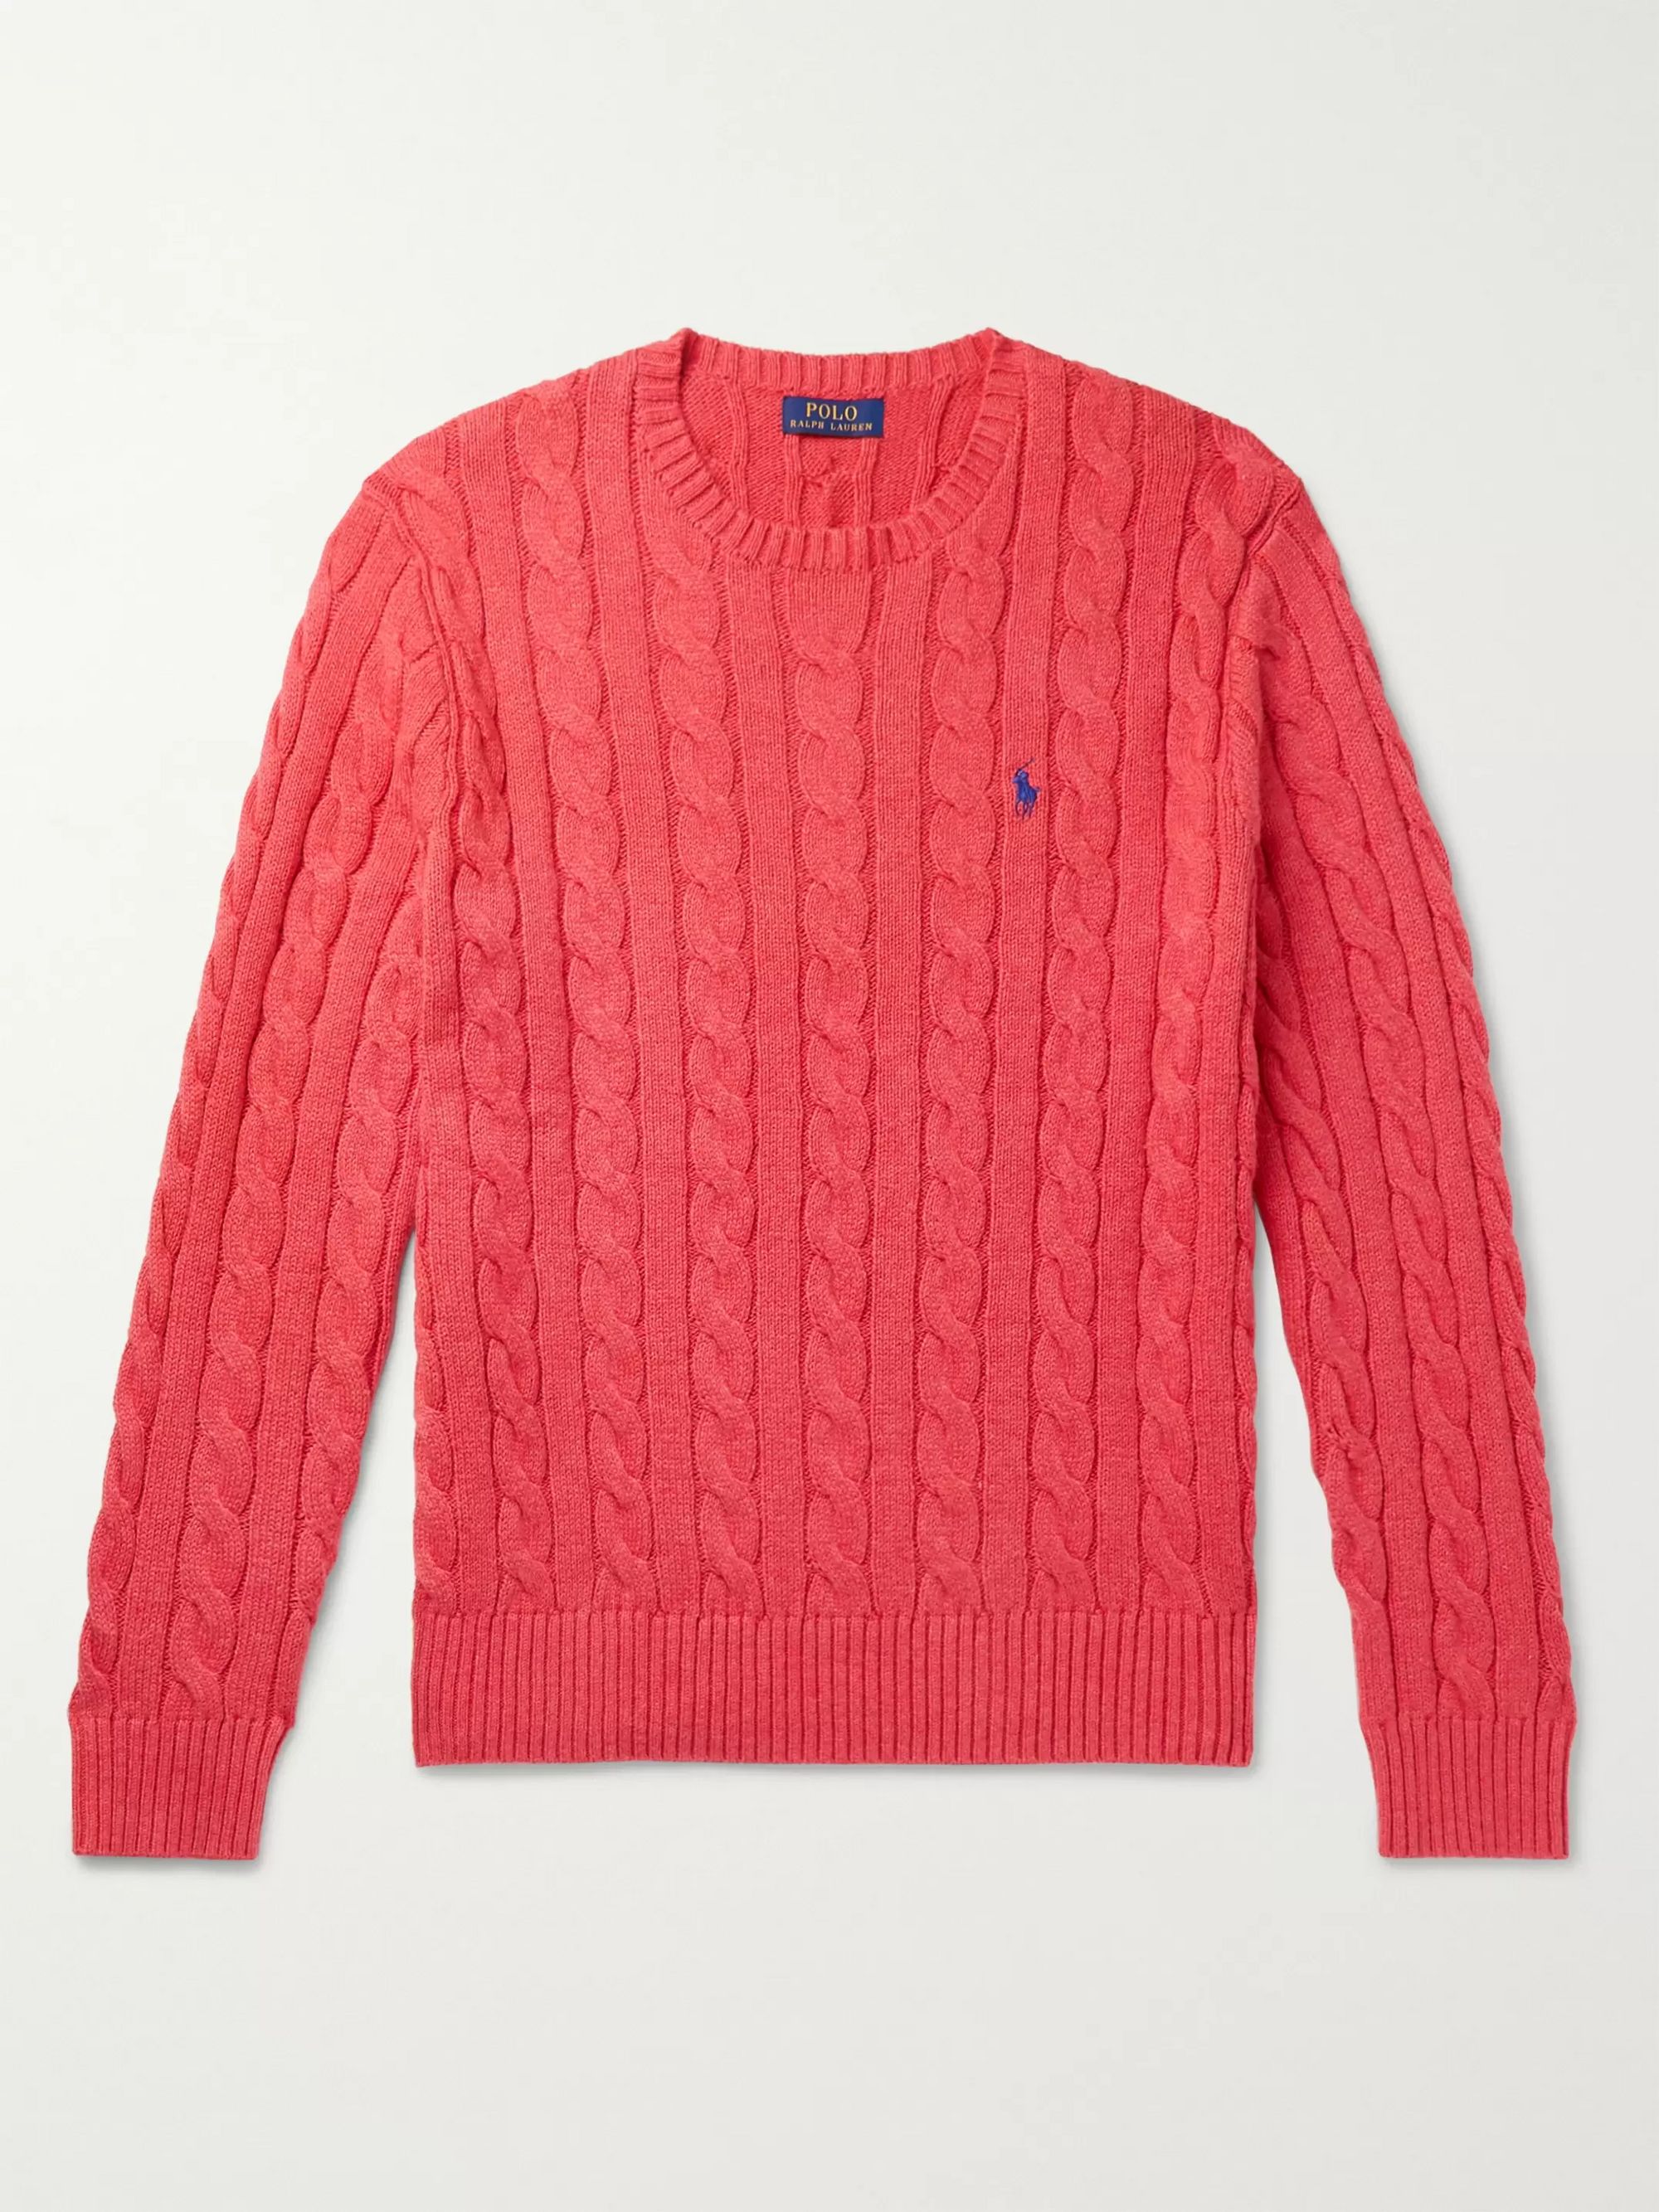 red ralph lauren cable knit jumper